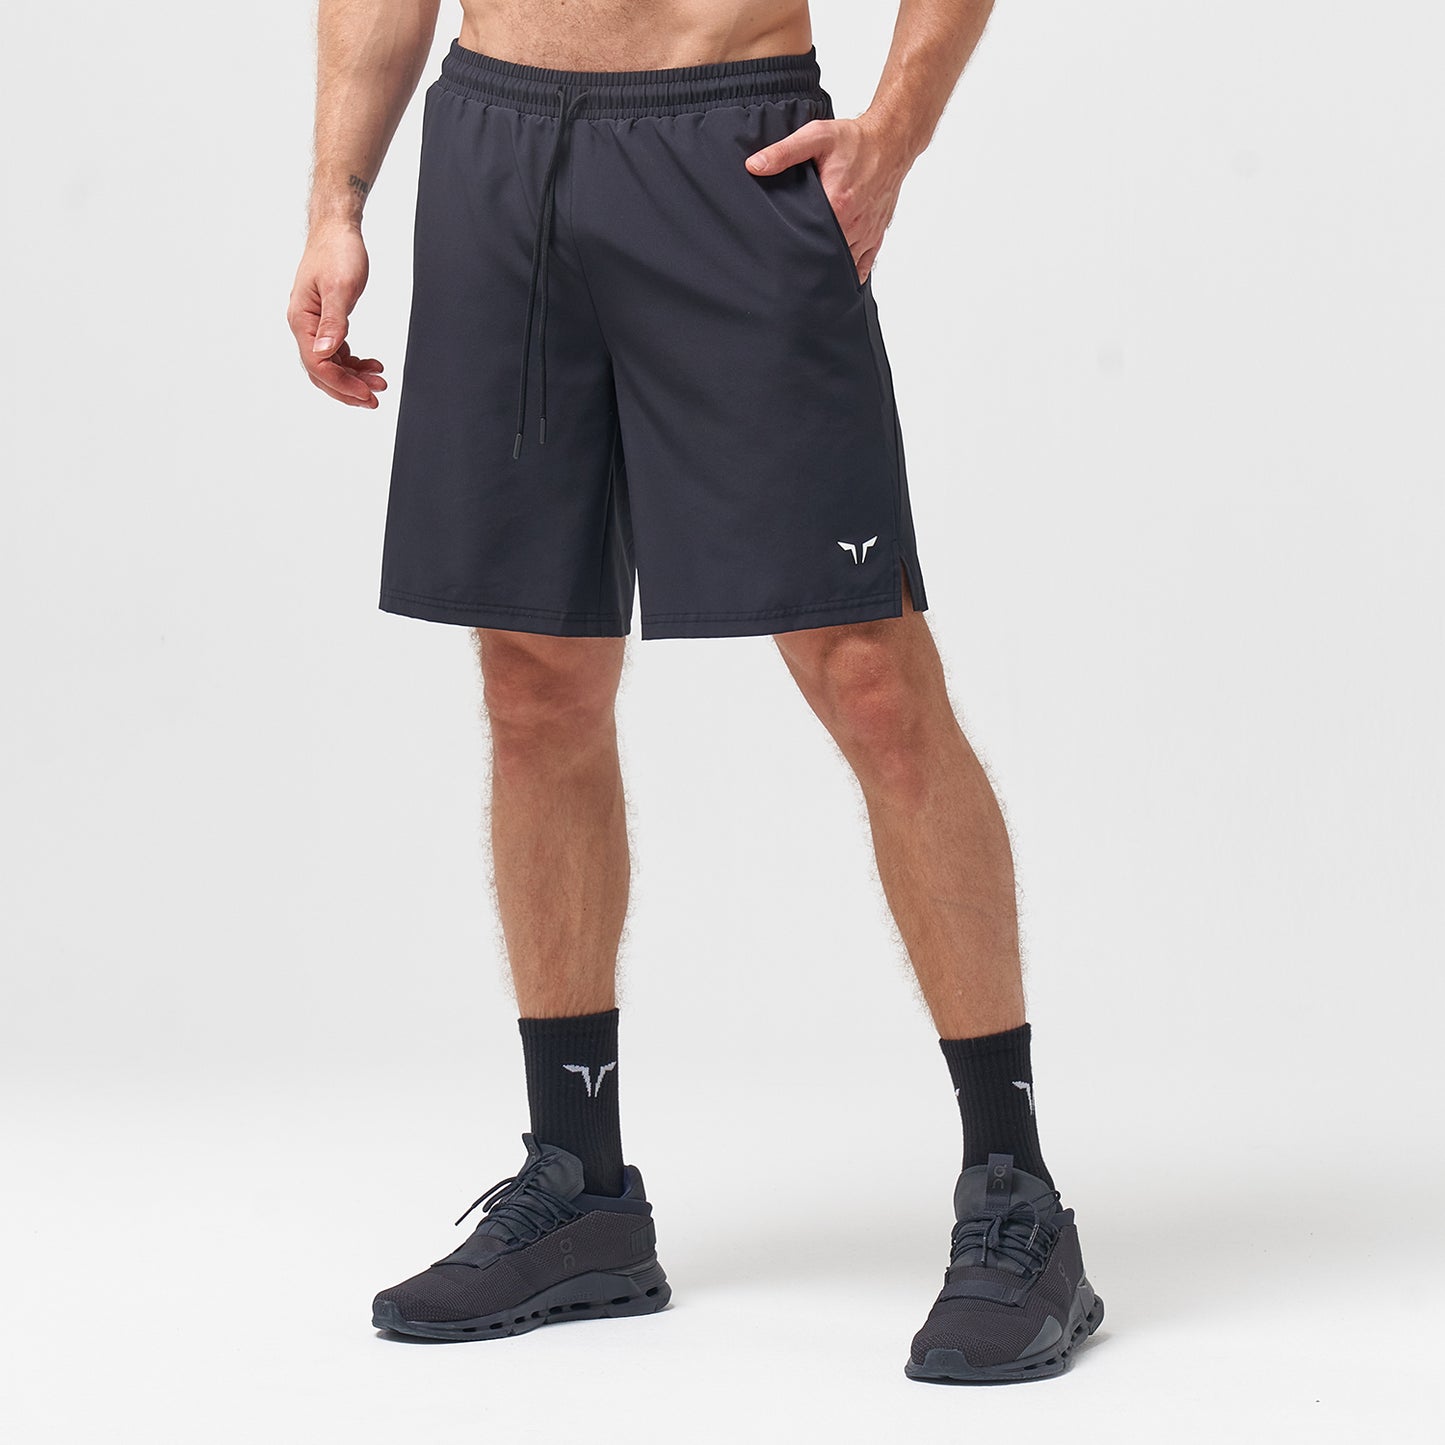 squatwolf-gym-wear-essential-9-inch-shorts-black-workout-short-for-men